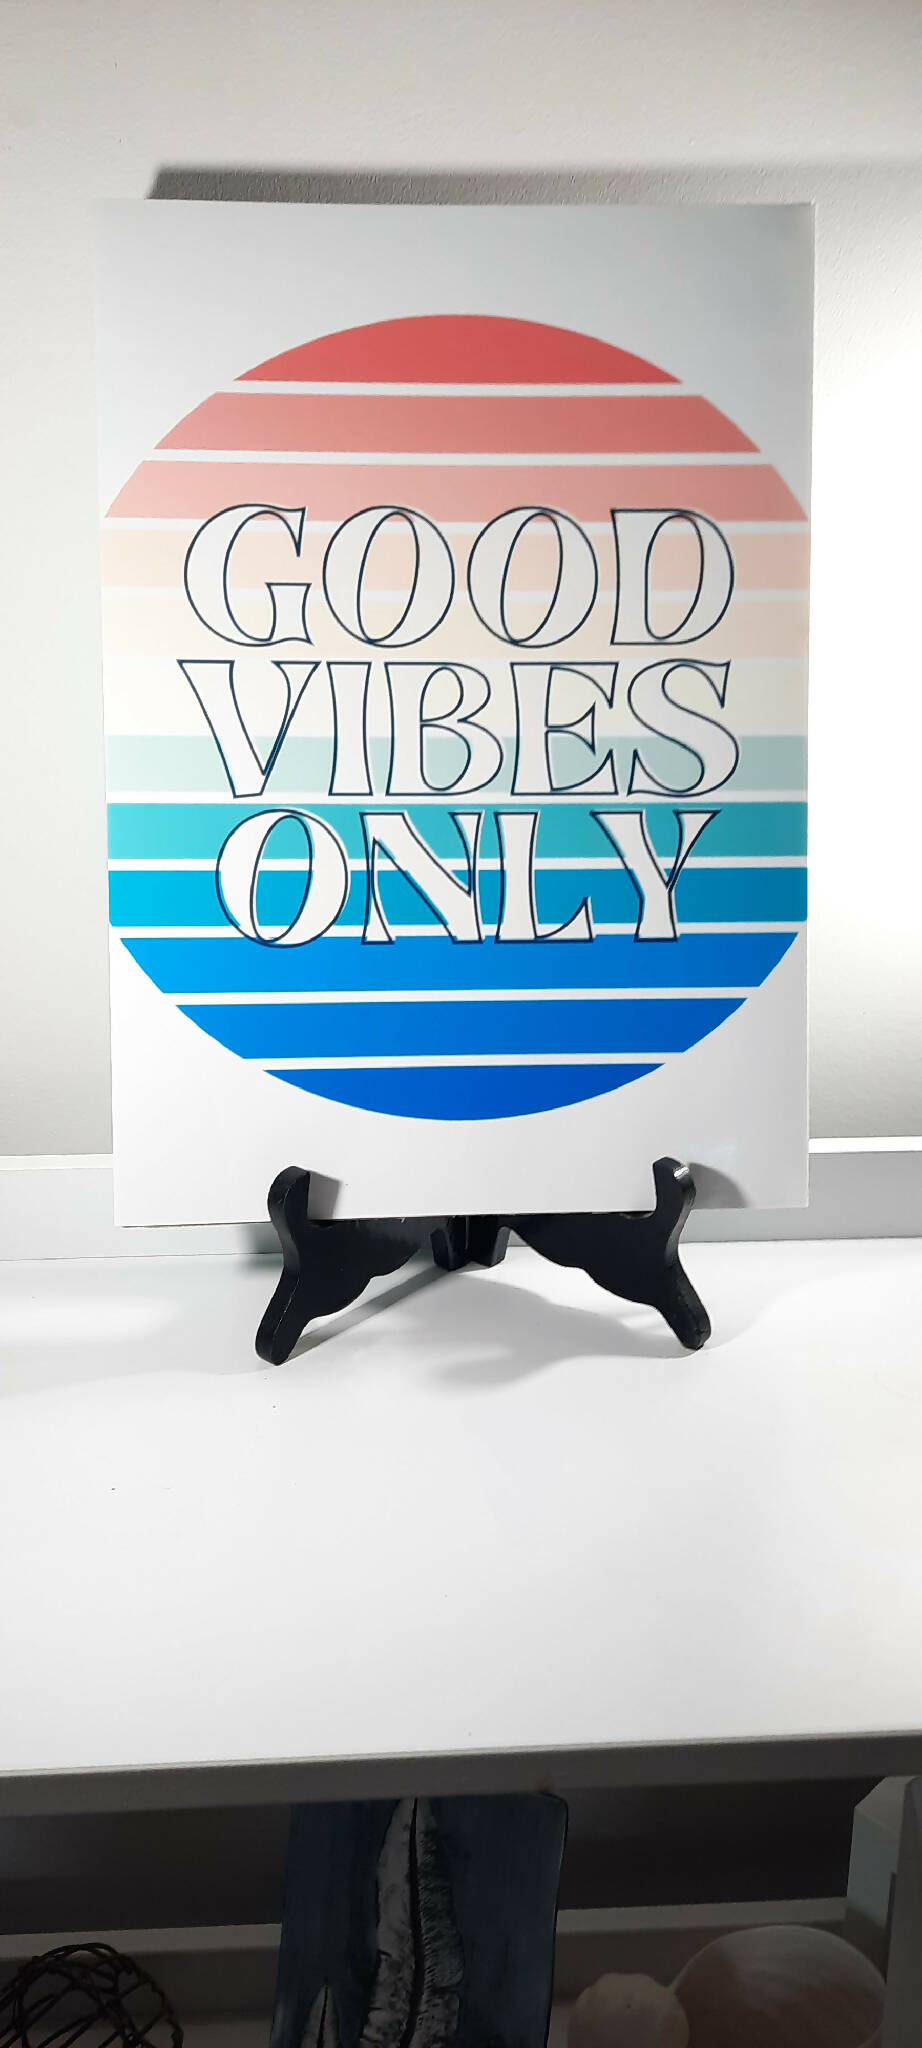 Good vibes only, Print, Poster, Wall art, Welsh poster, Digital Art, A5